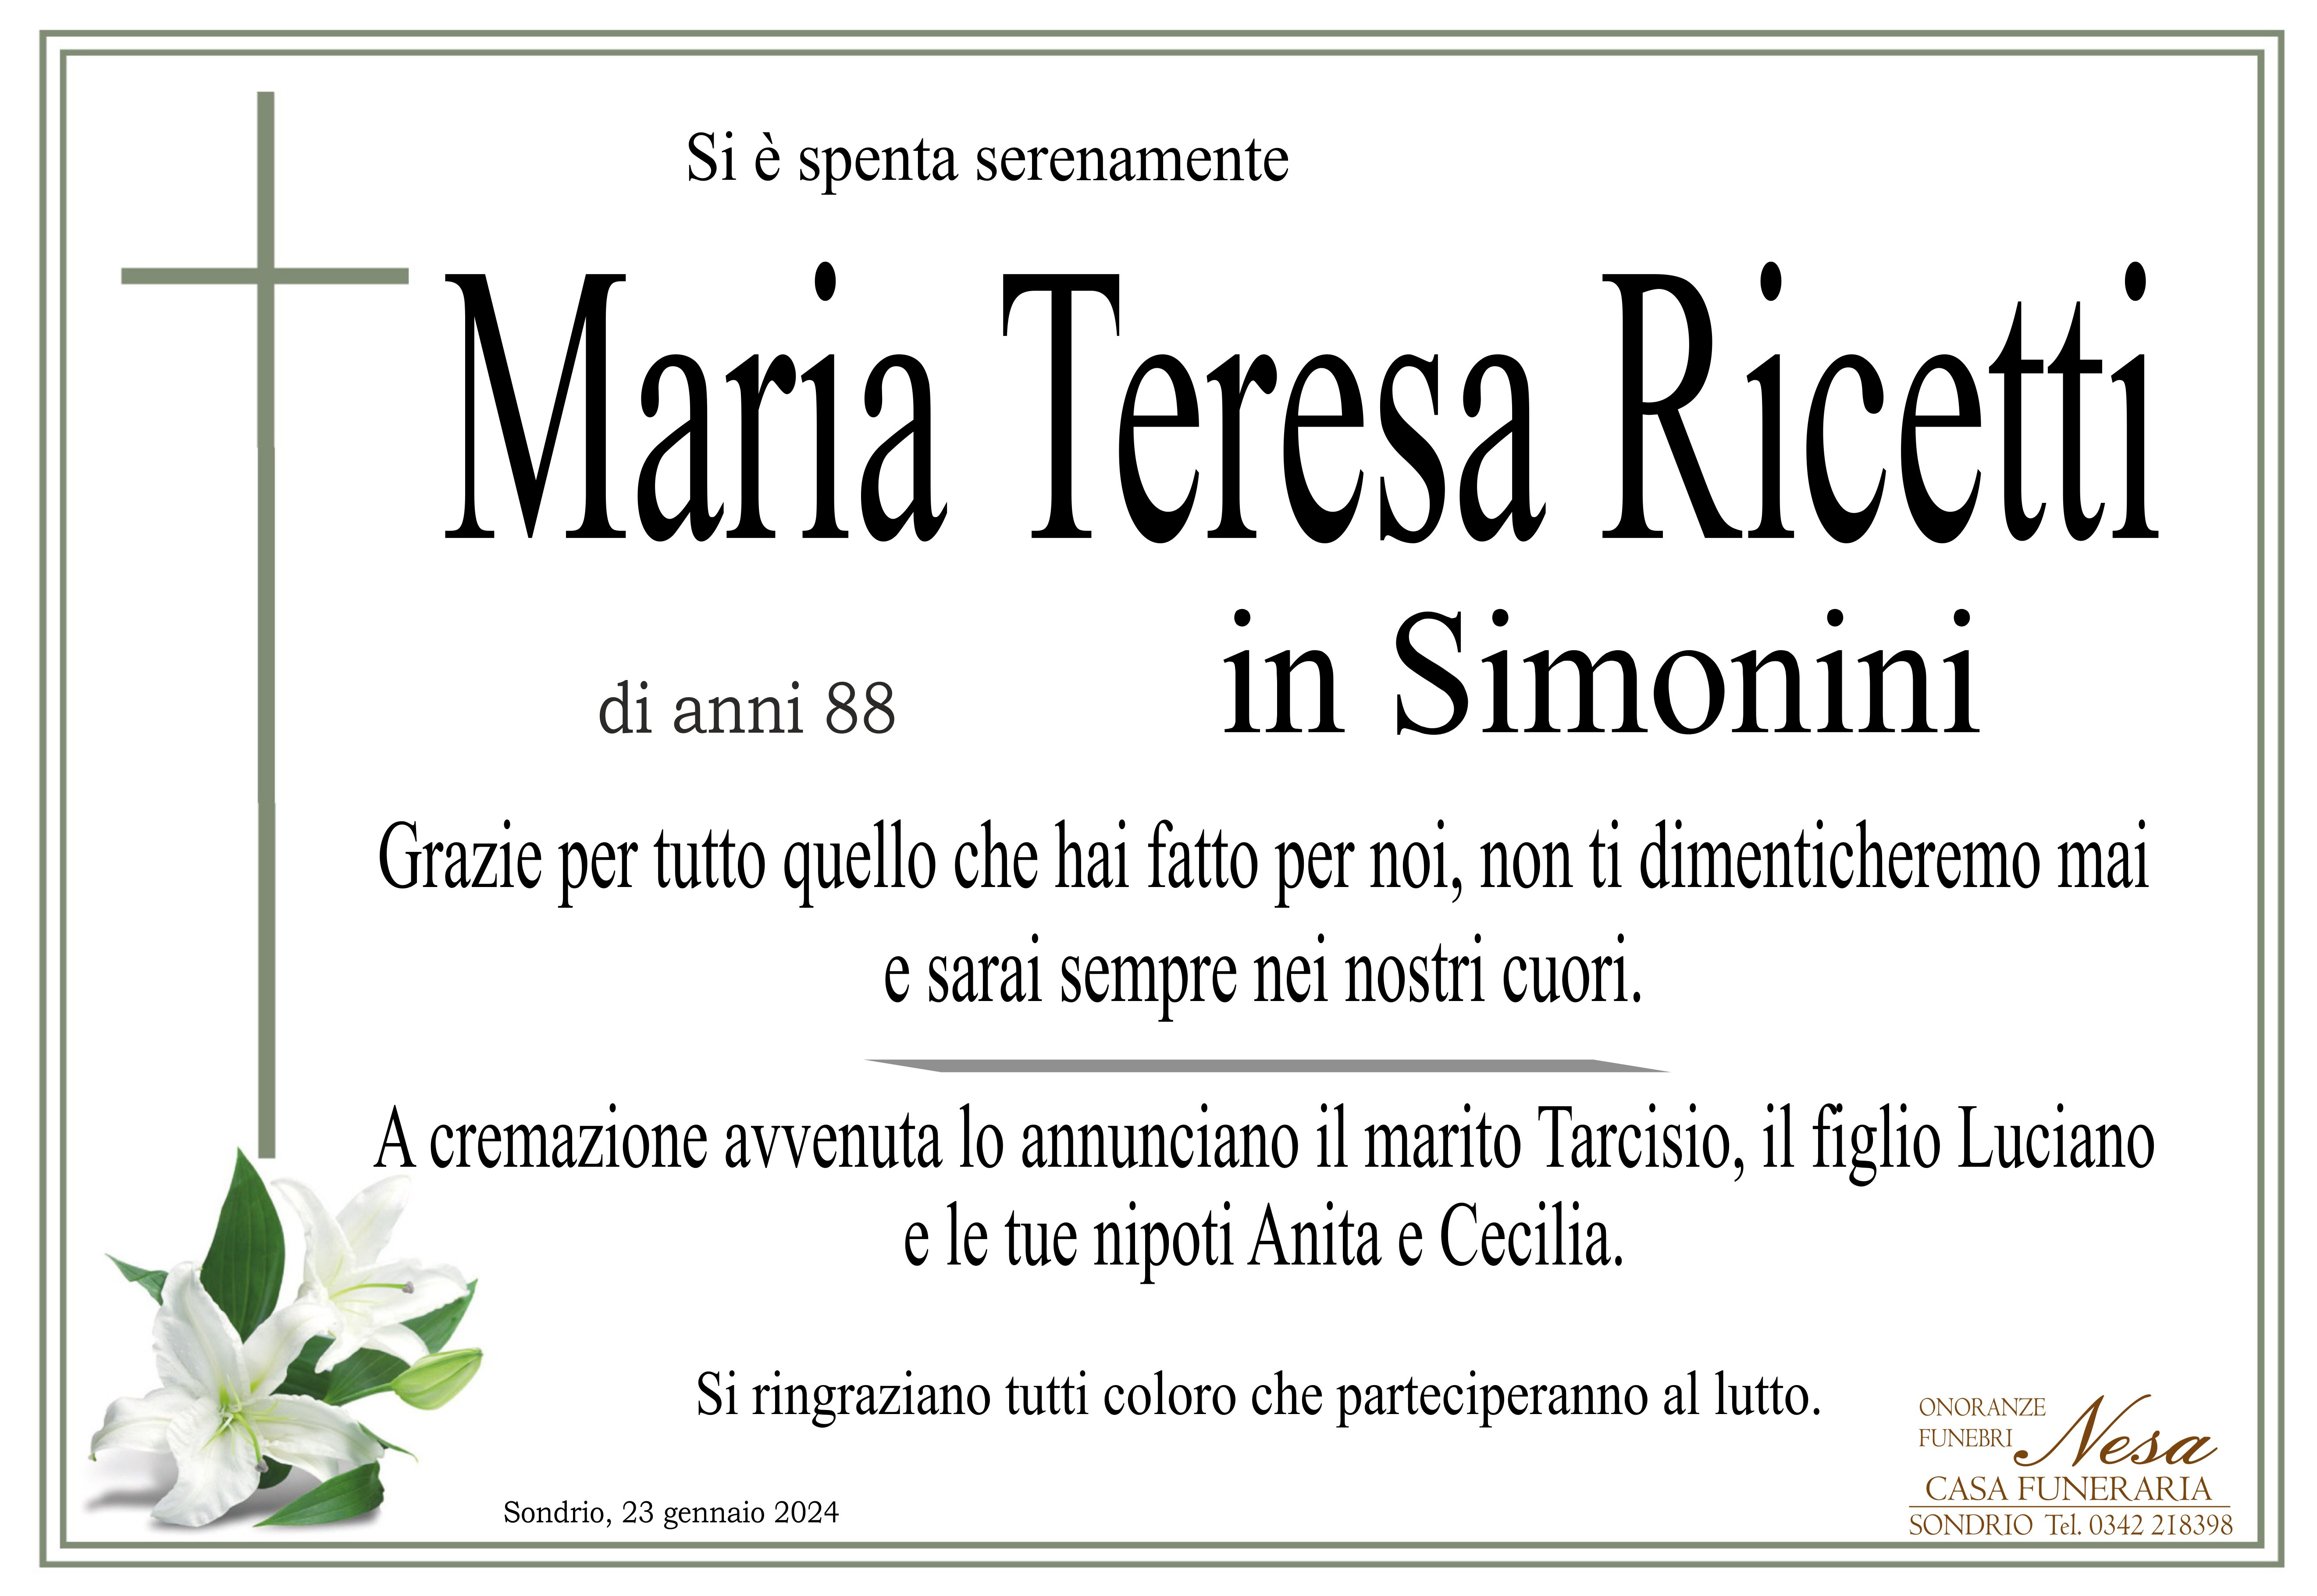 Necrologio Maria Teresa Ricetti in Simonini